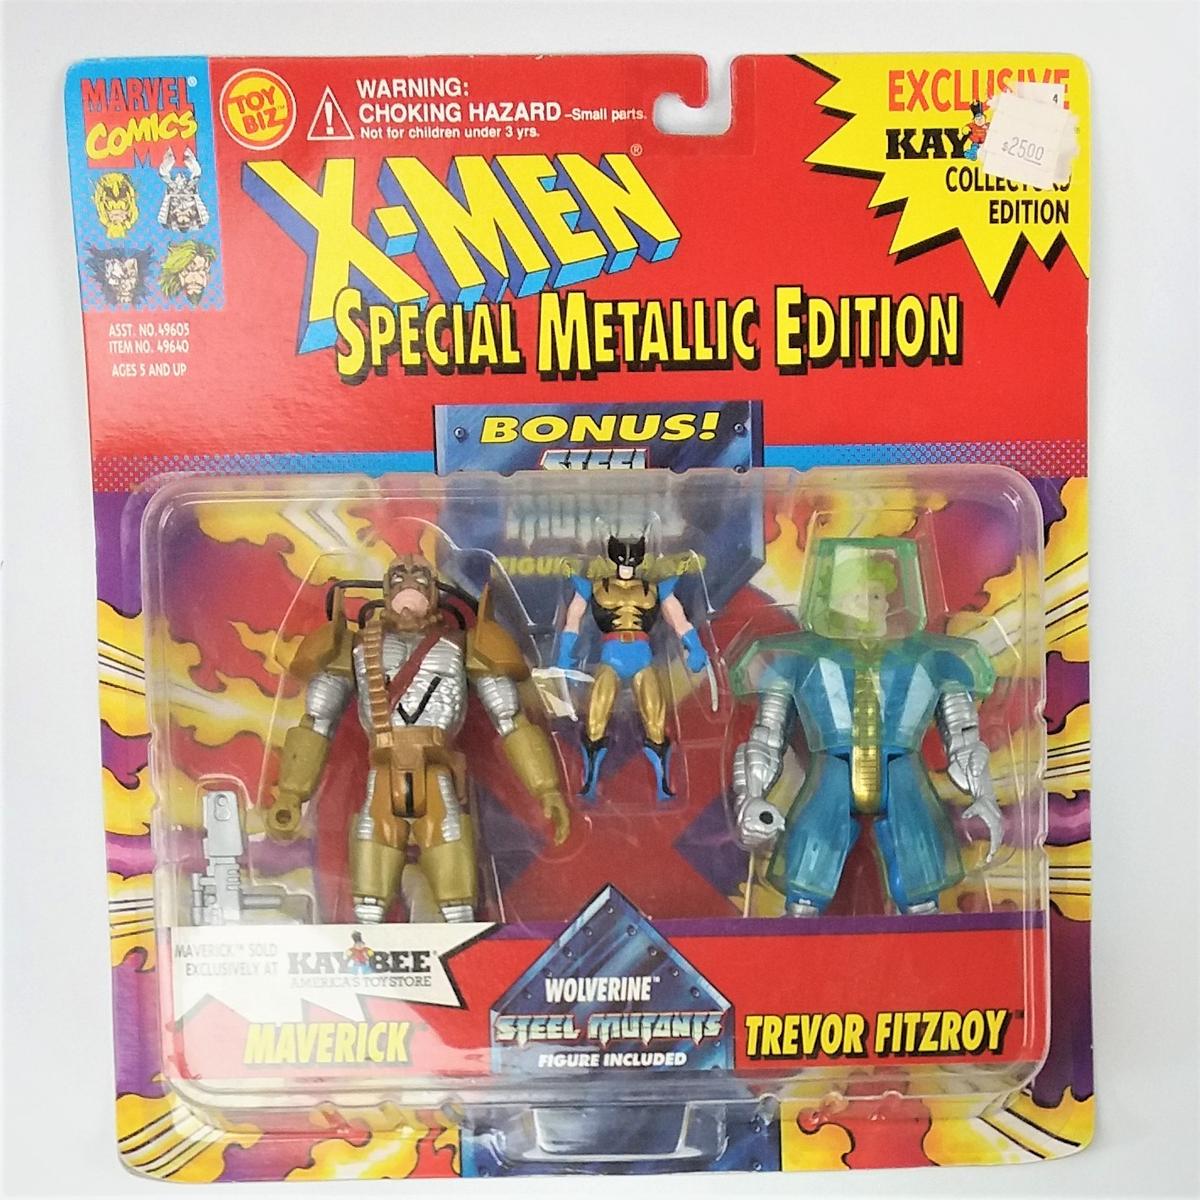 X-Men Special Metallic Edition Maverick / Trevor Fitzroy Steel Mutants Action Figure Set